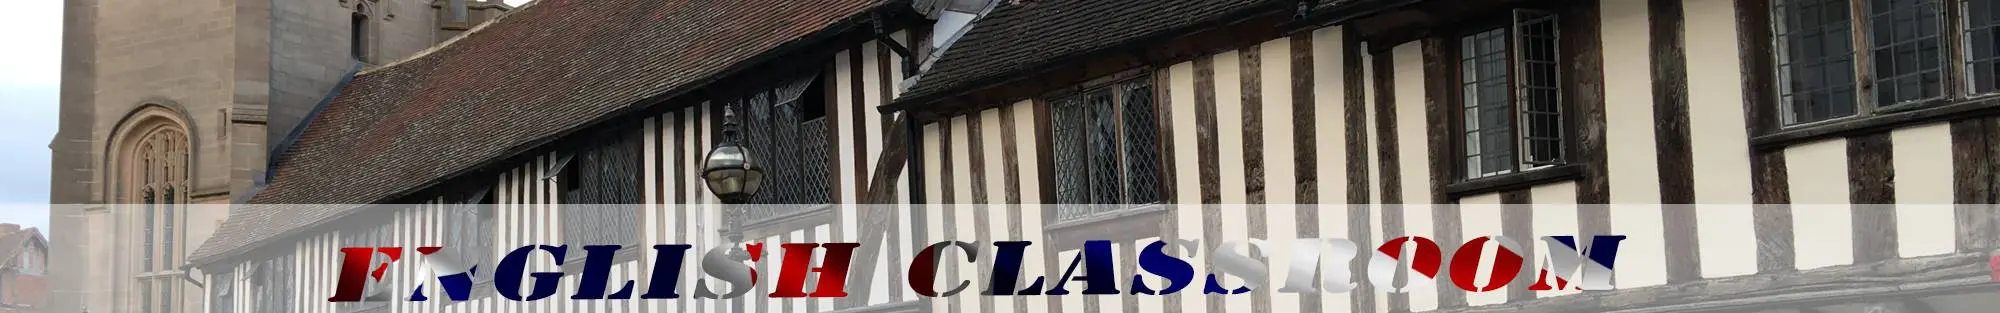 timbered houses straford-upon-avon header english classroom